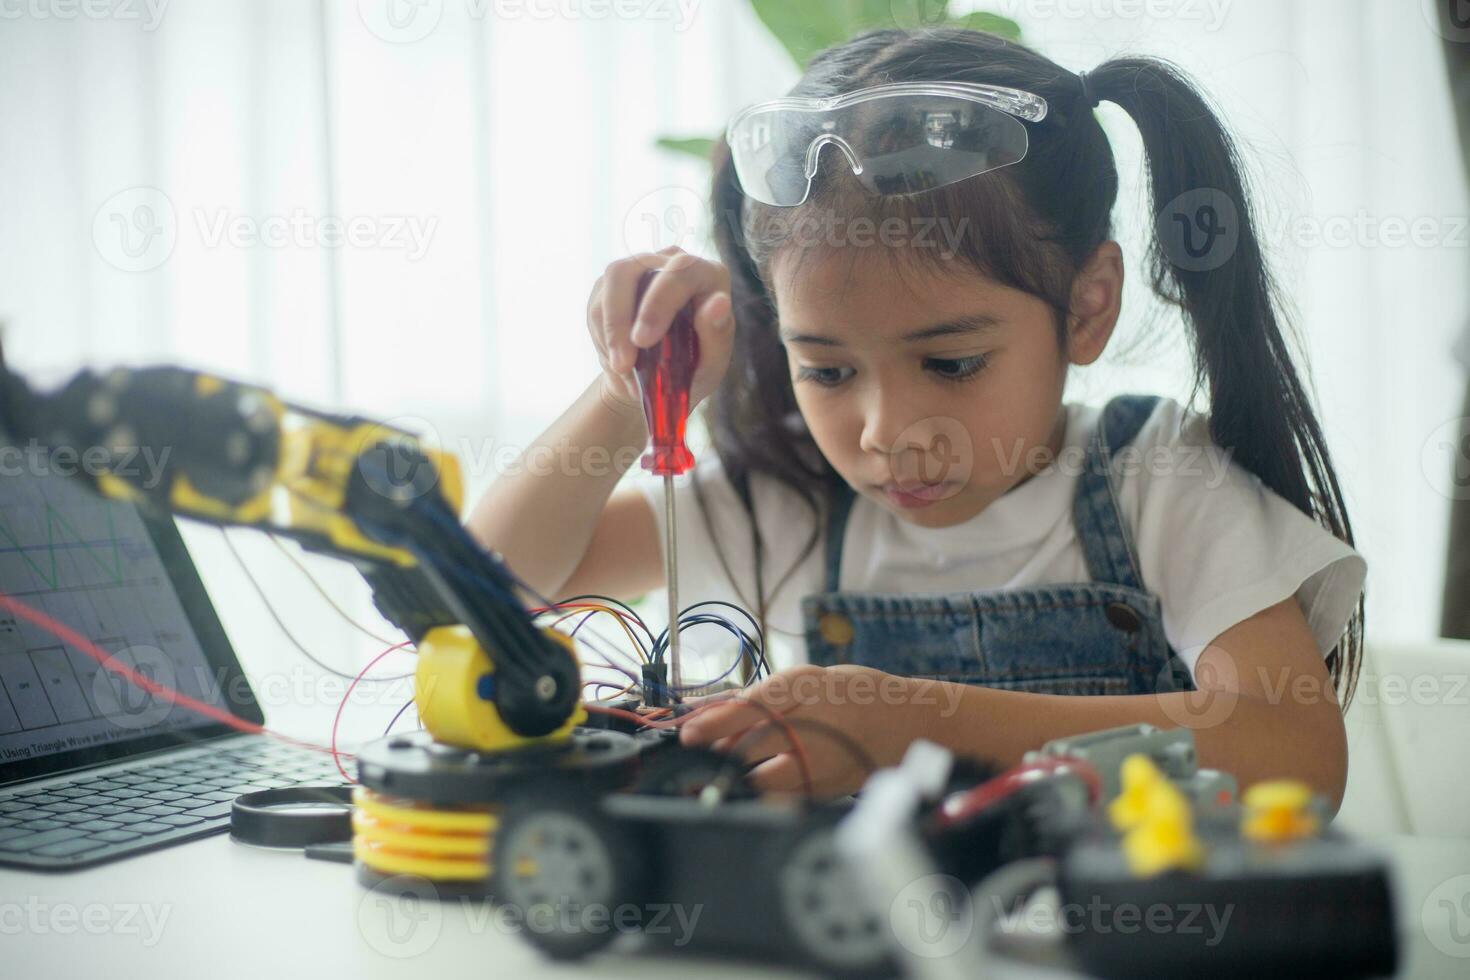 vástago educación concepto. asiático joven niña aprendizaje robot diseño. foto